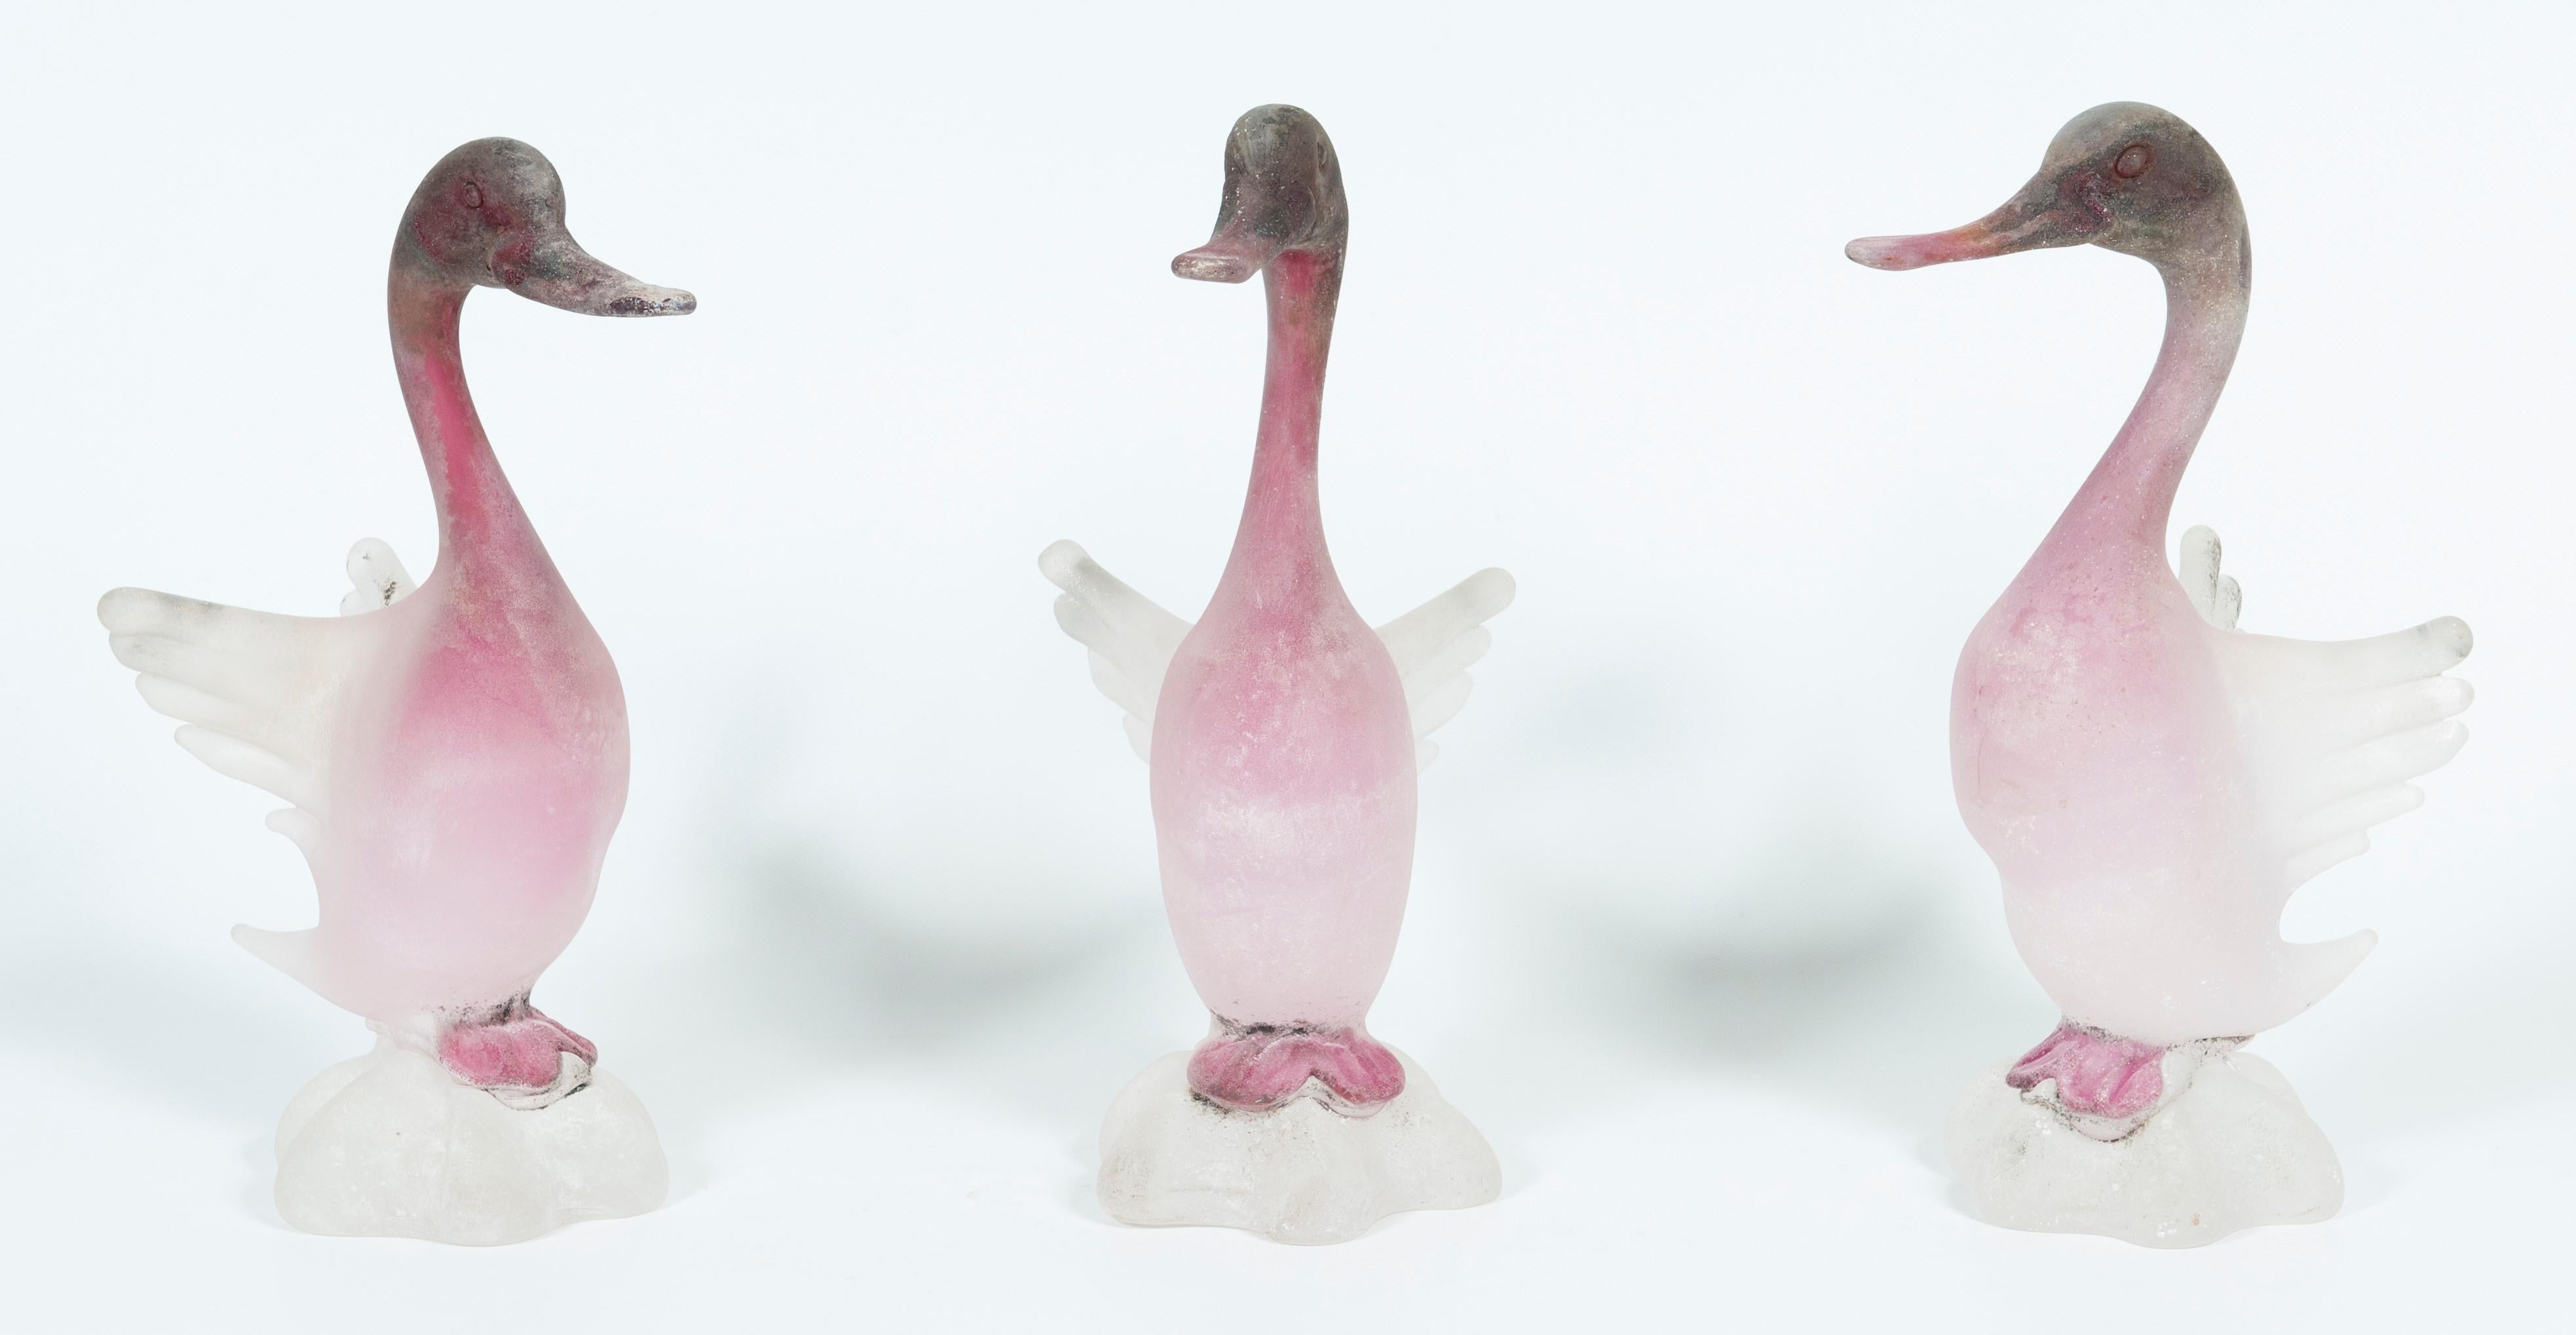 Set of three Murano glass ducks by Gino Cenedese, 1980s.
These outstanding Murano glass ducks were handcrafted utilizing the Venetian 